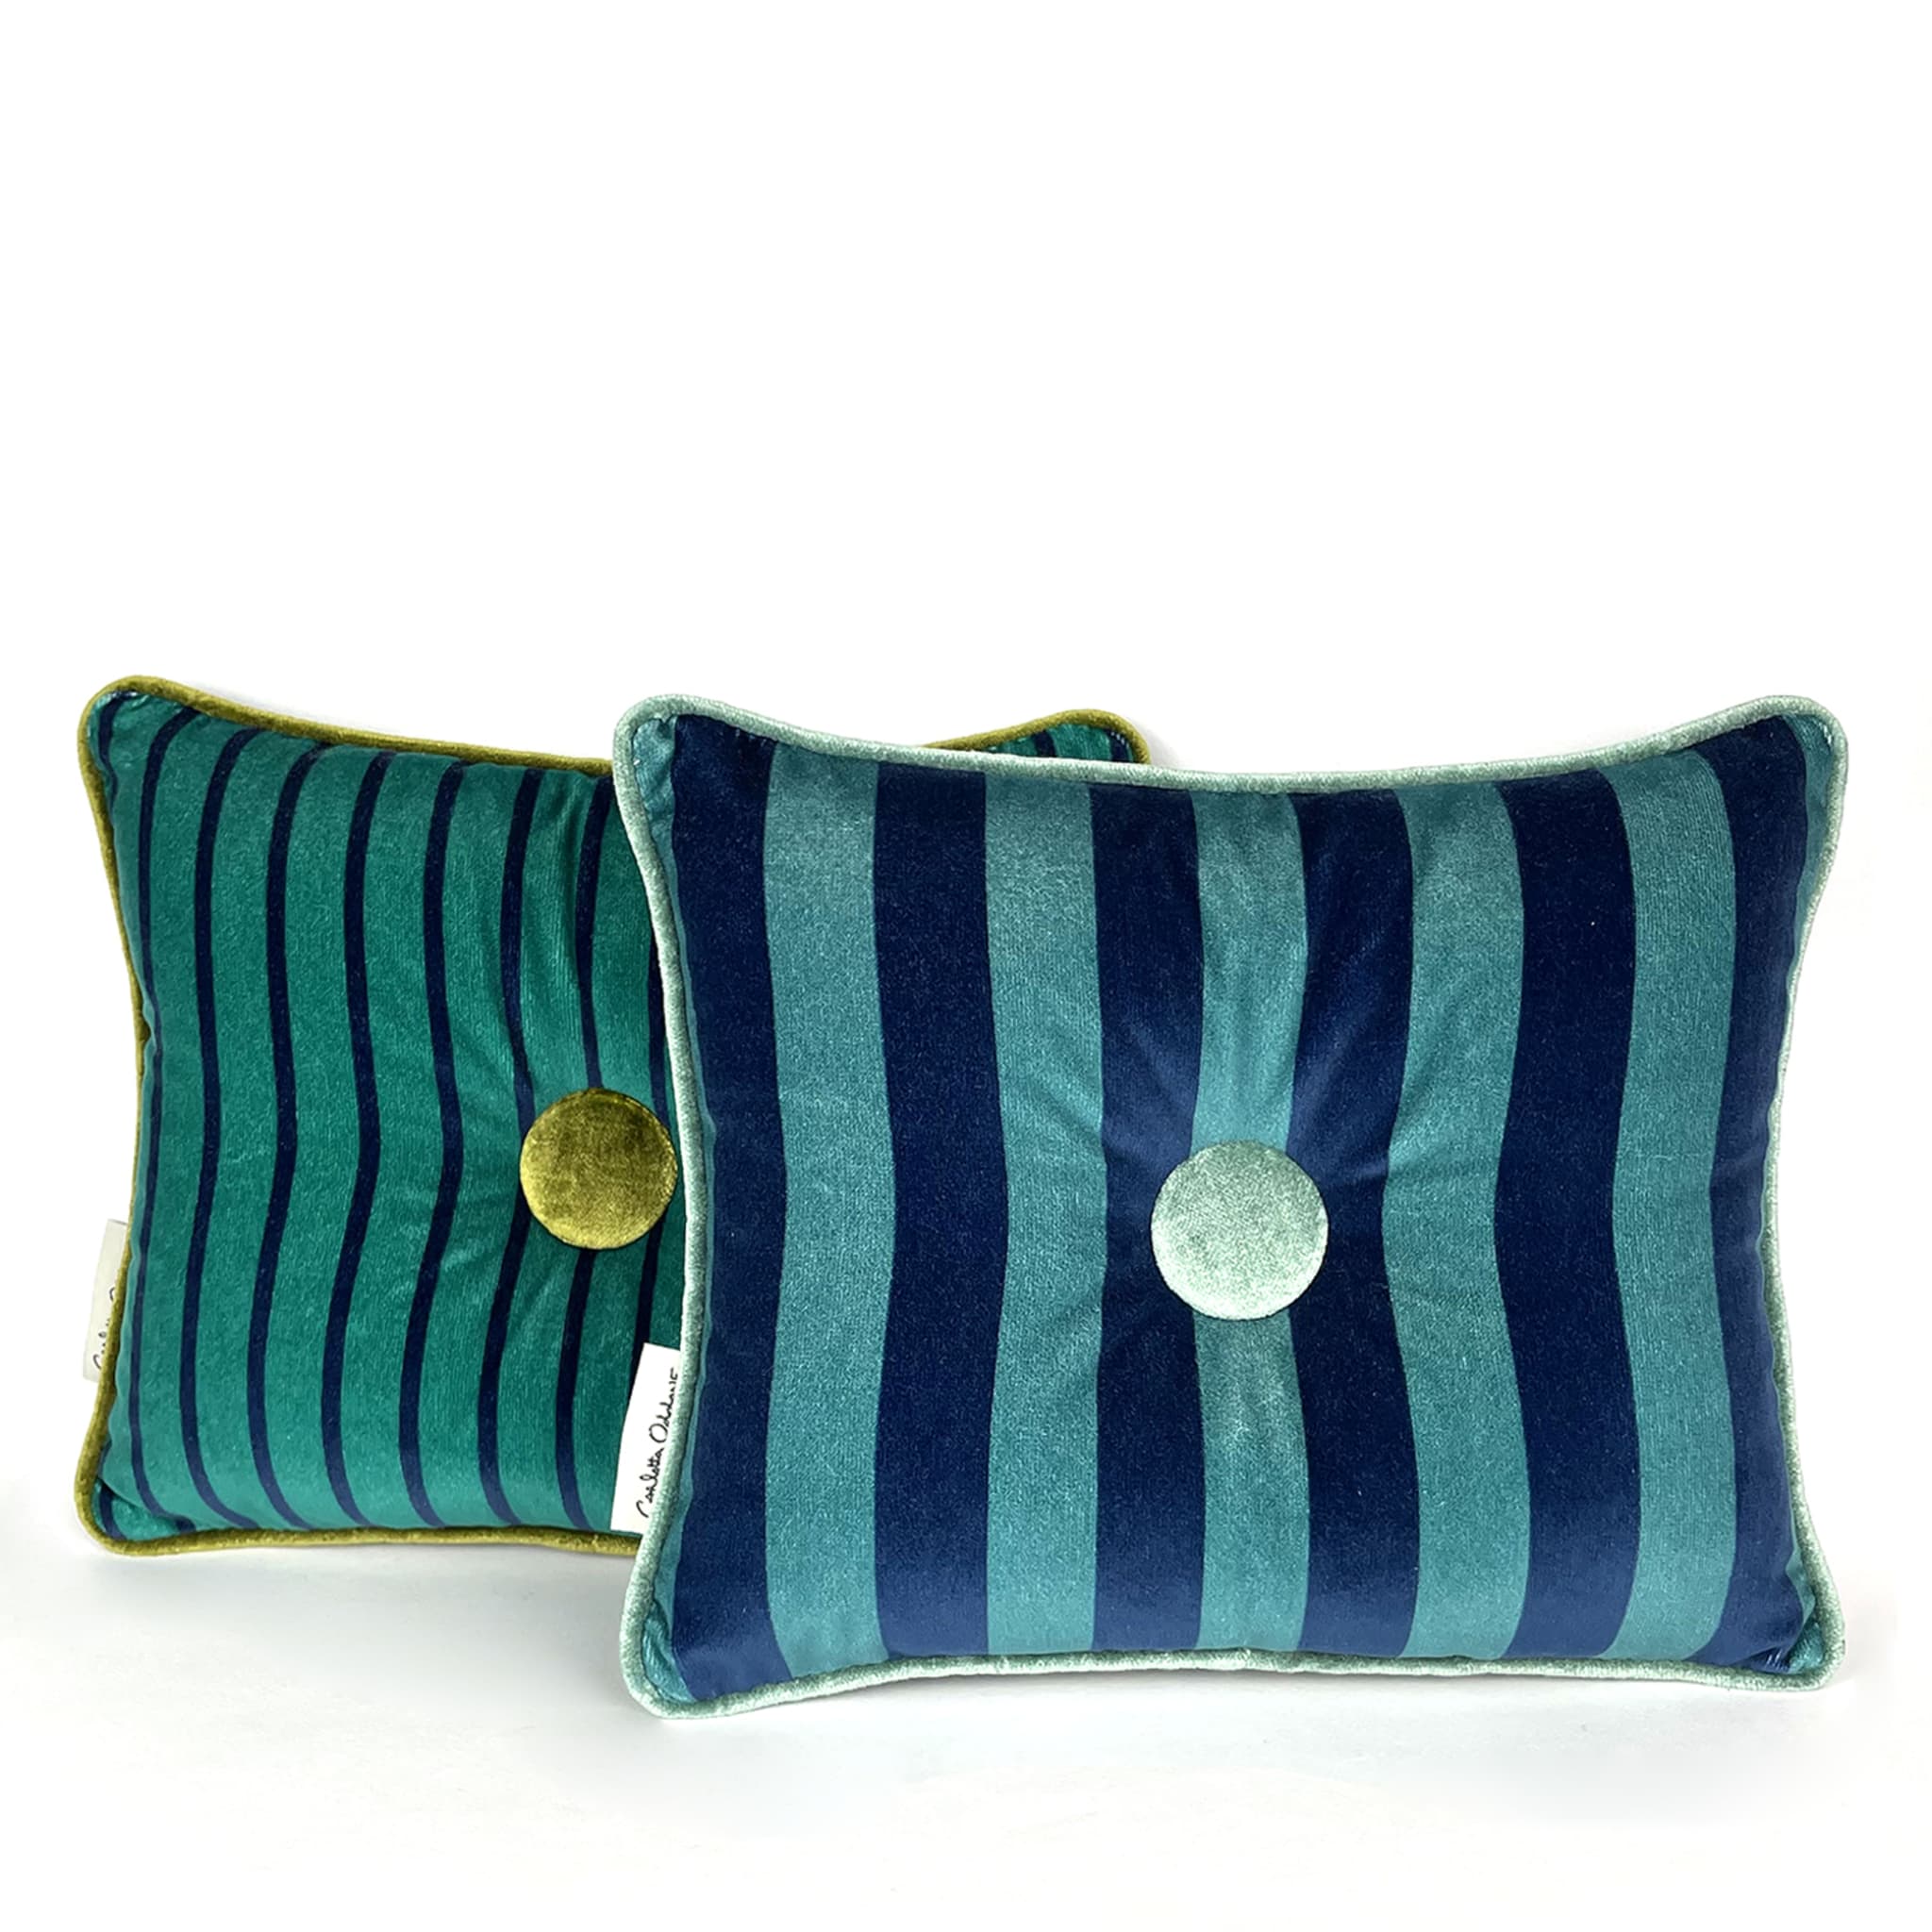 Sweet Pillow Blue Baltic & Peacock Green Cushions - Alternative view 3